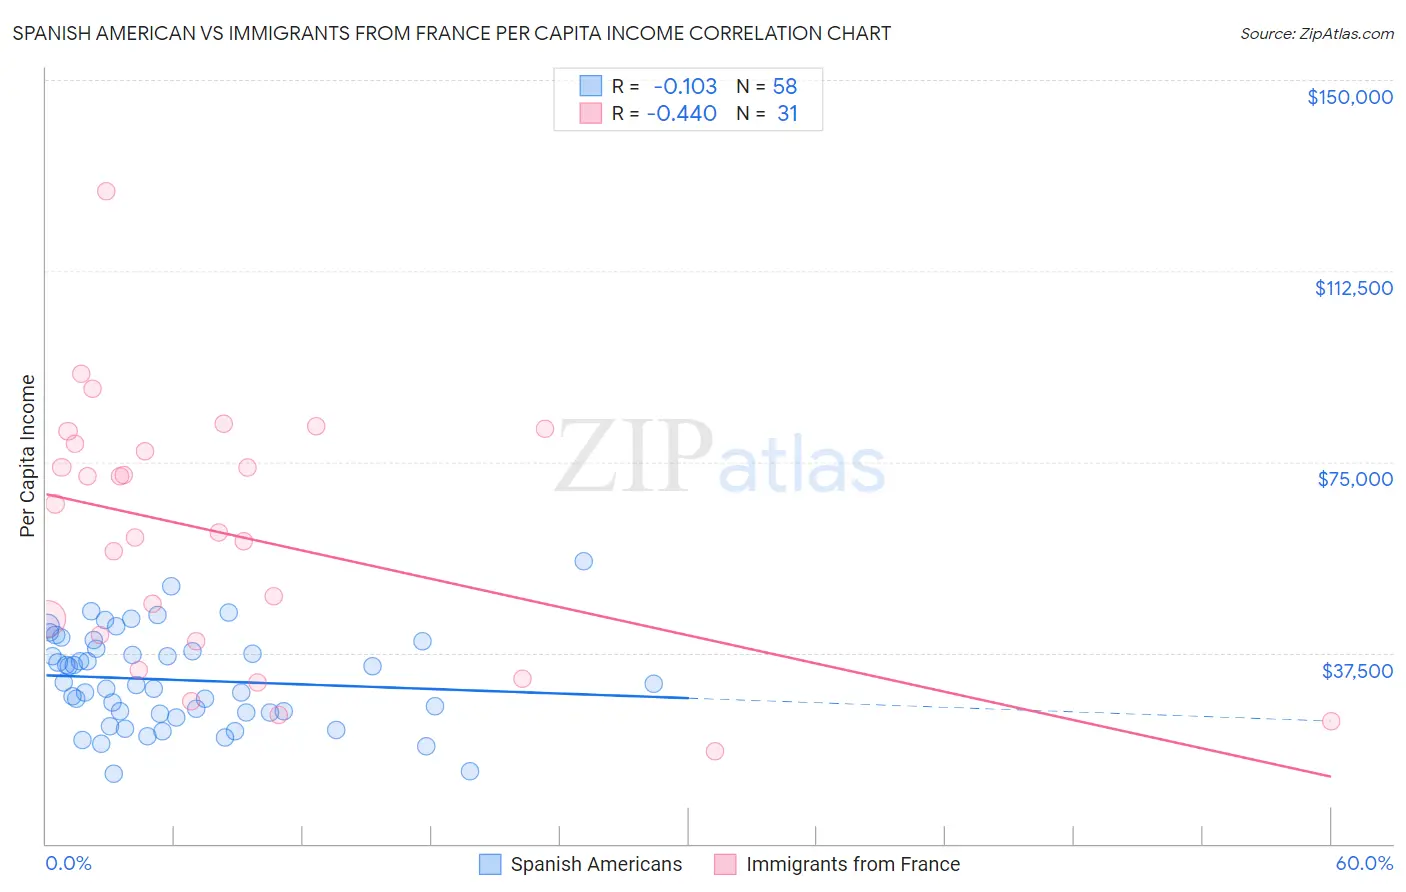 Spanish American vs Immigrants from France Per Capita Income